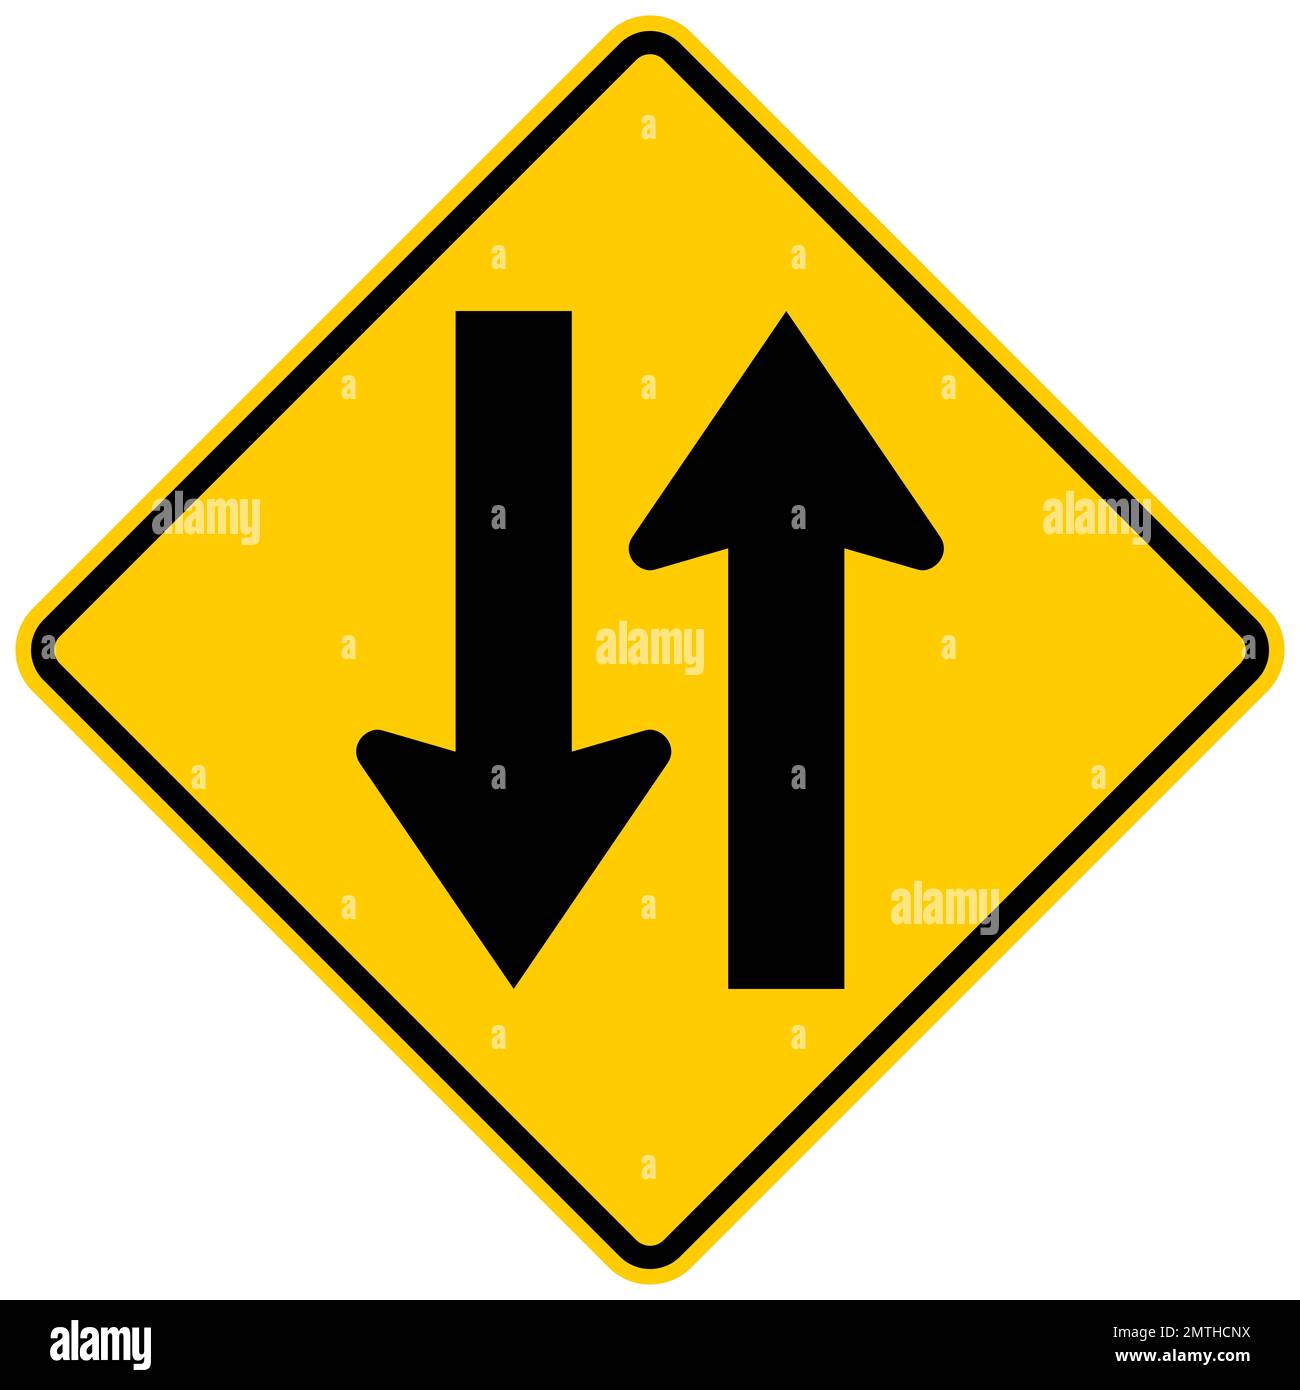 Two way traffic warning sign Stock Photo